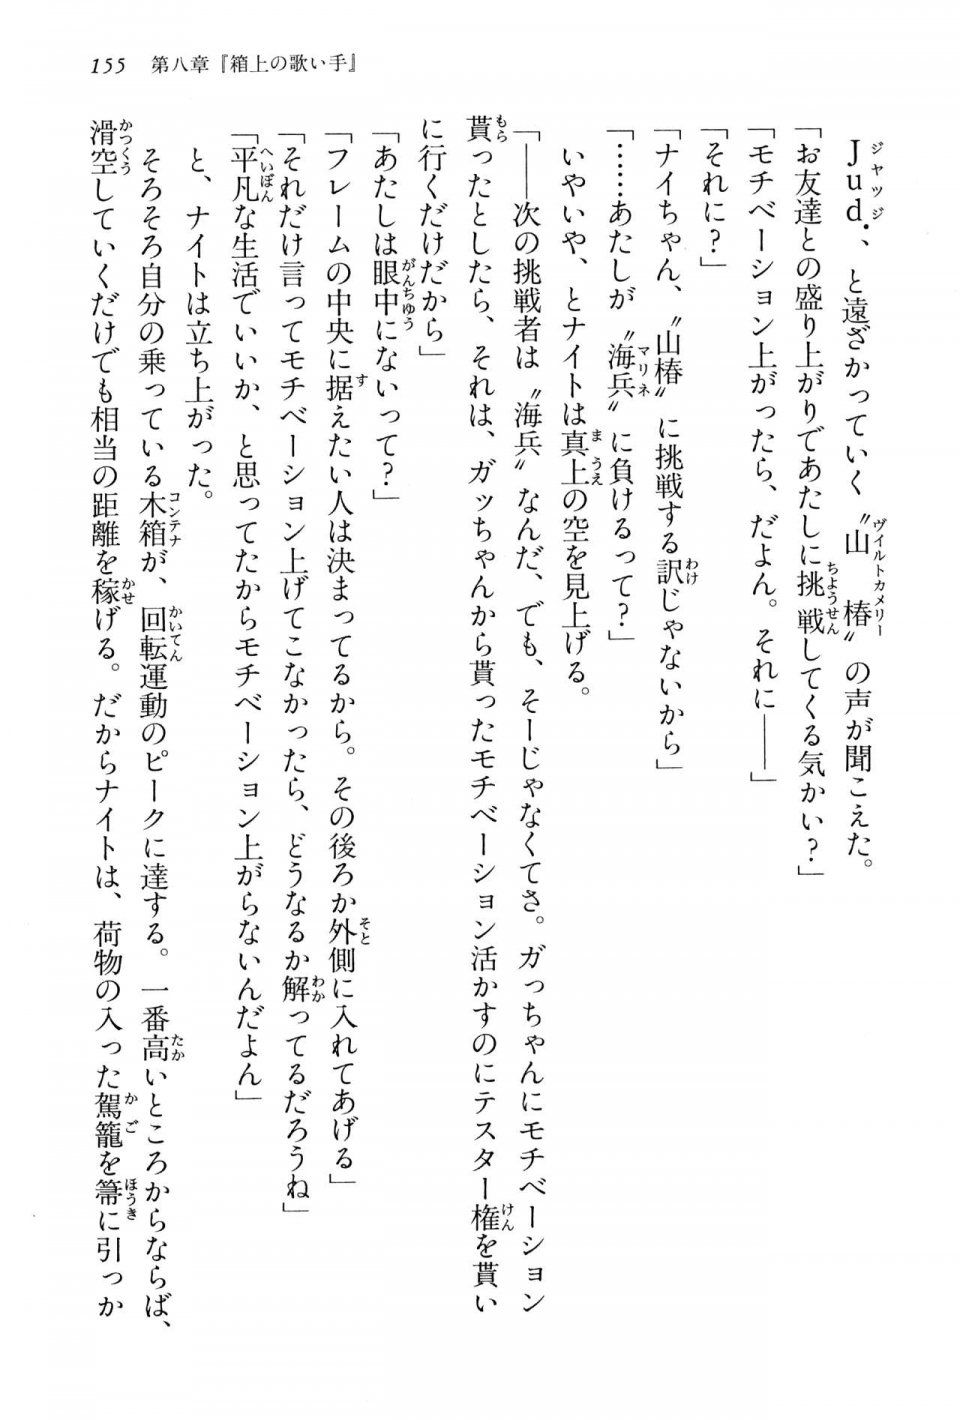 Kyoukai Senjou no Horizon BD Special Mininovel Vol 2(1B) - Photo #159